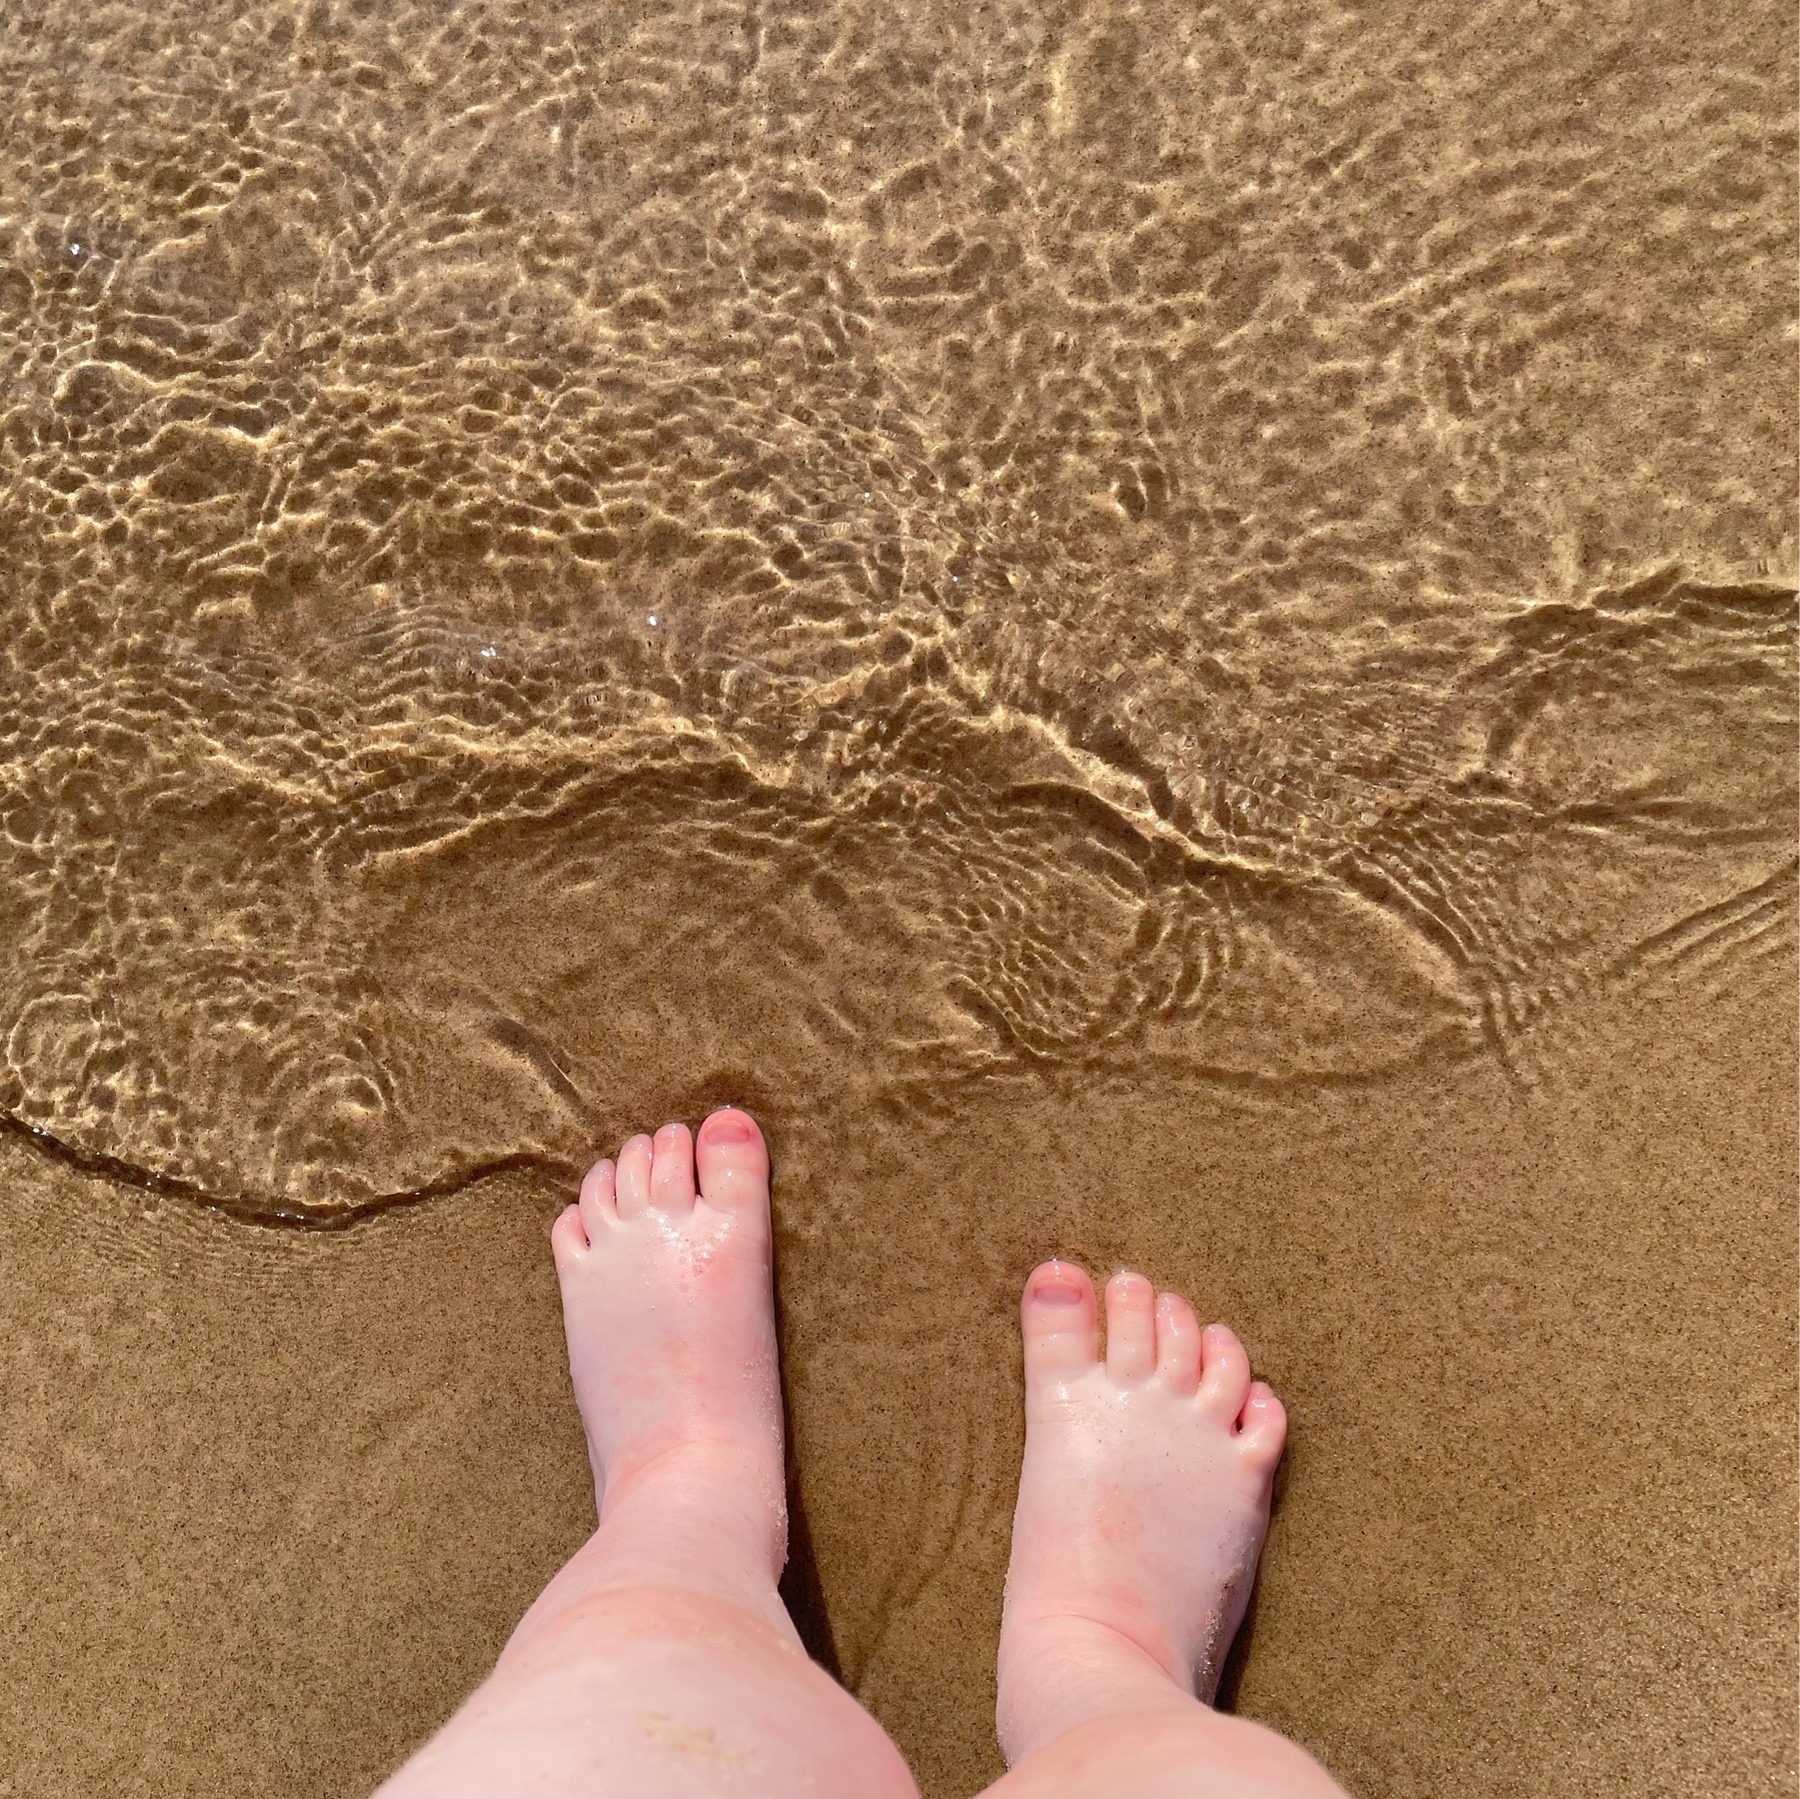 Little girl's feet in lake